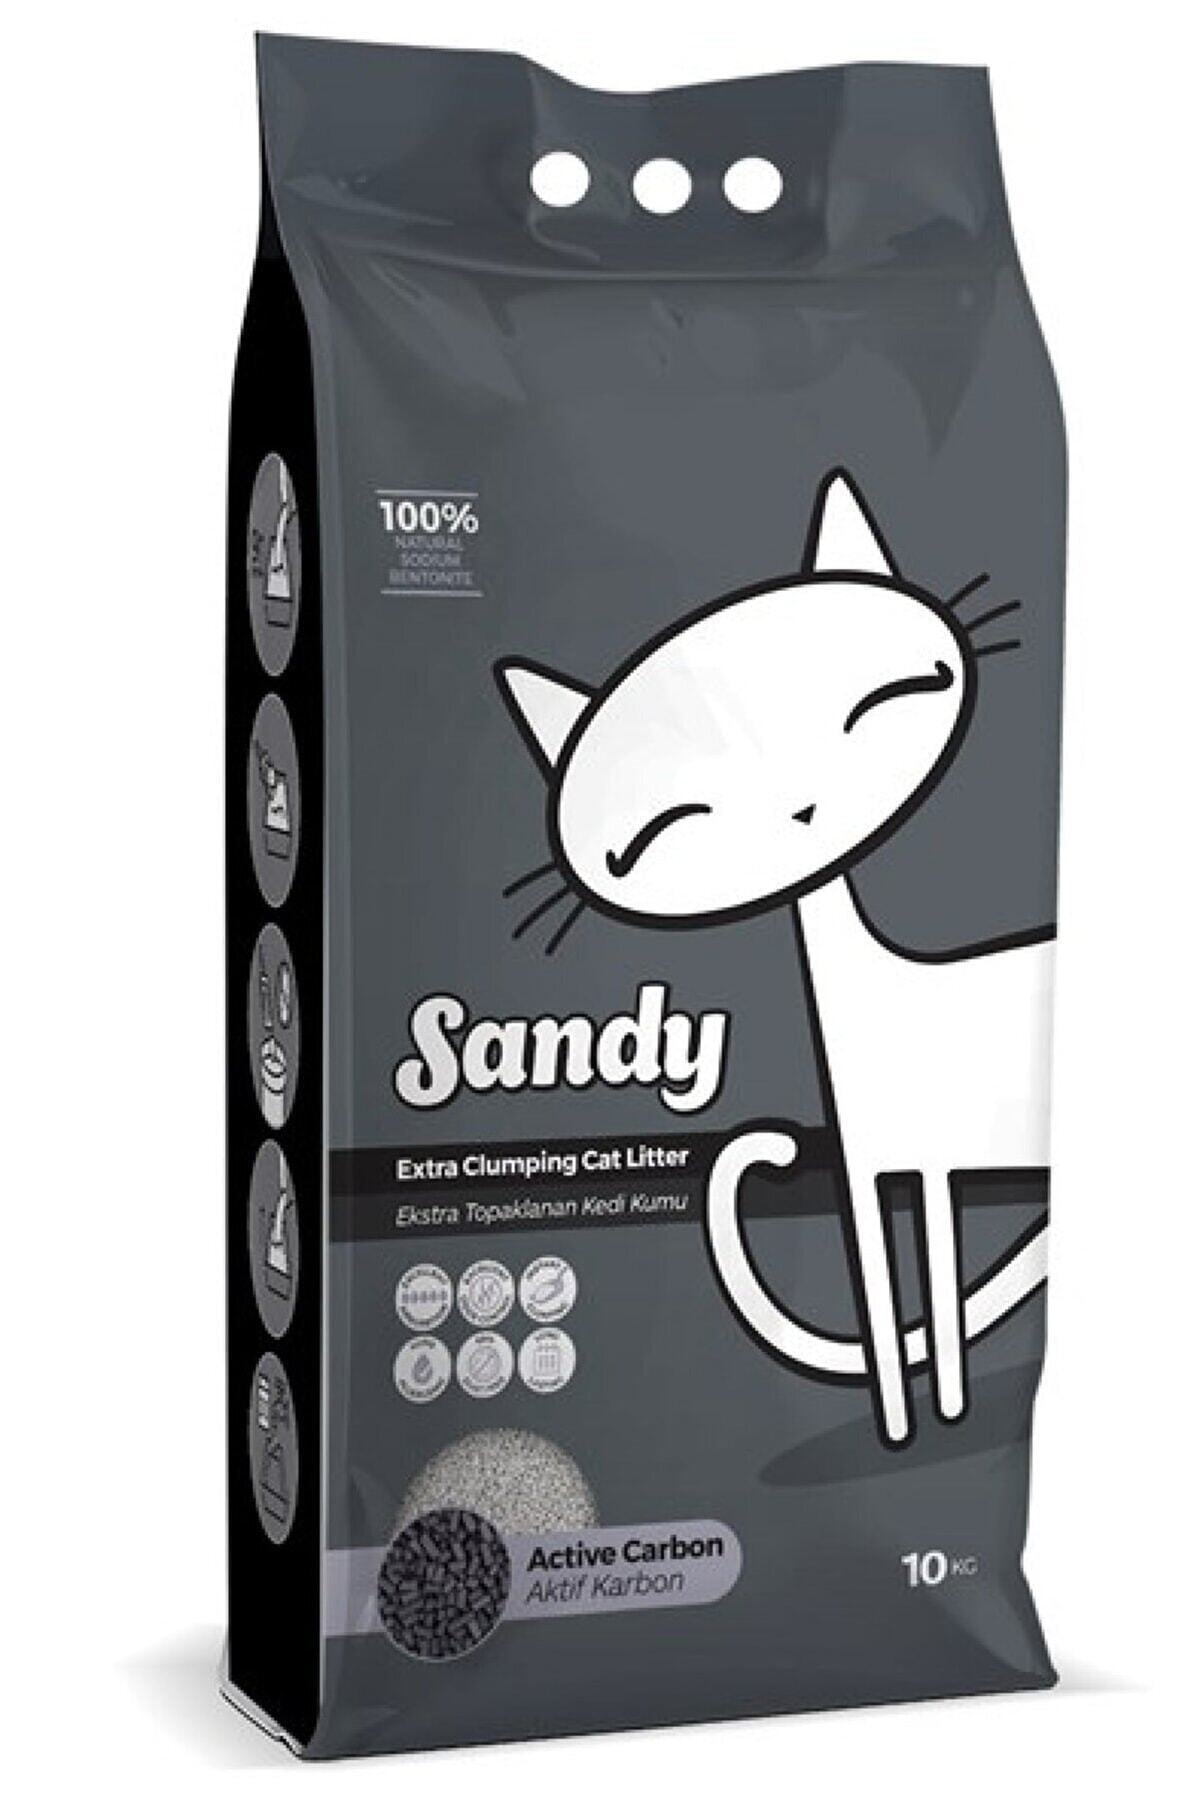 Sandy Aktif Karbonlu Extra Topaklanan Kedi Kumu 10kg